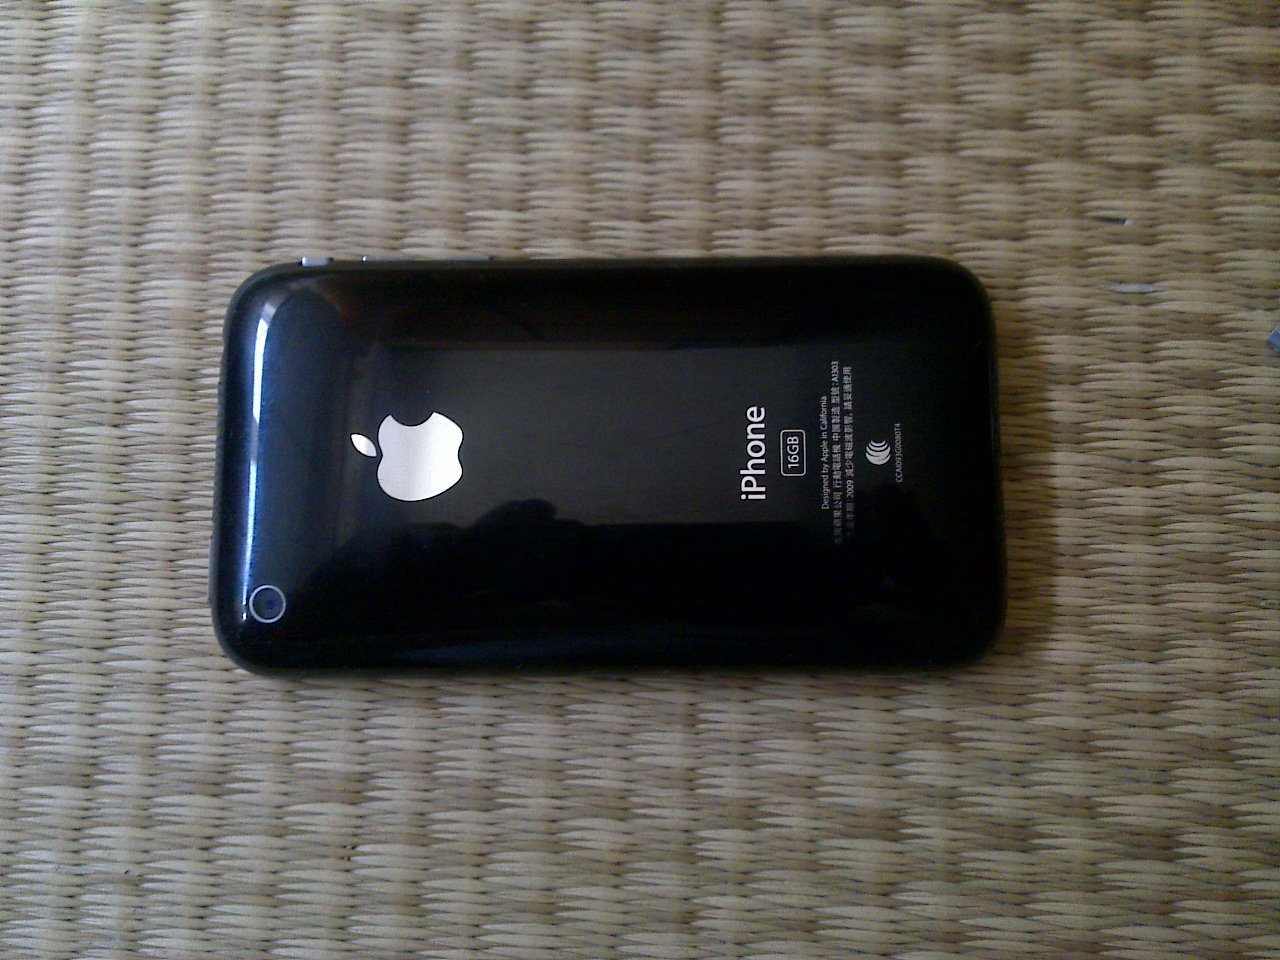 iPhone經典iPhone3GS再次发布，还会继续有些人为史蒂夫乔布斯“情结”付钱吗？